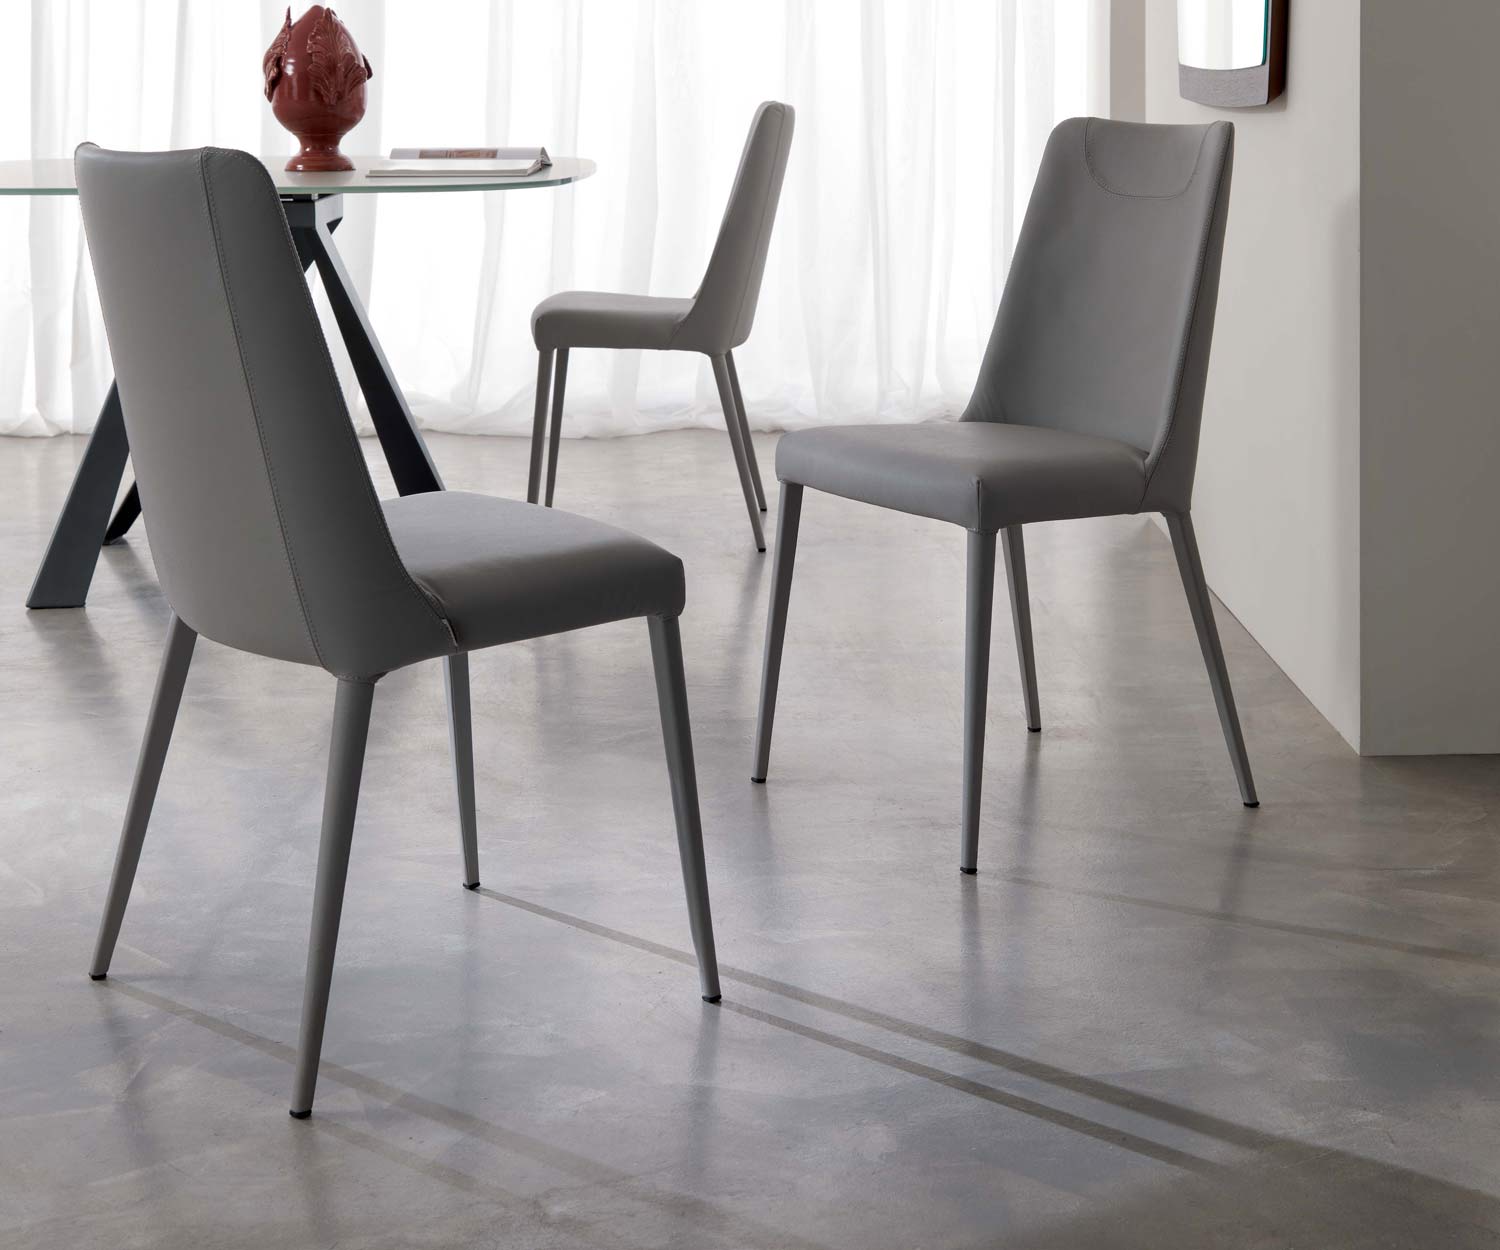 Moderner Ozzio Design Stuhl Sofia gepolsterter Esszimmerstuhl